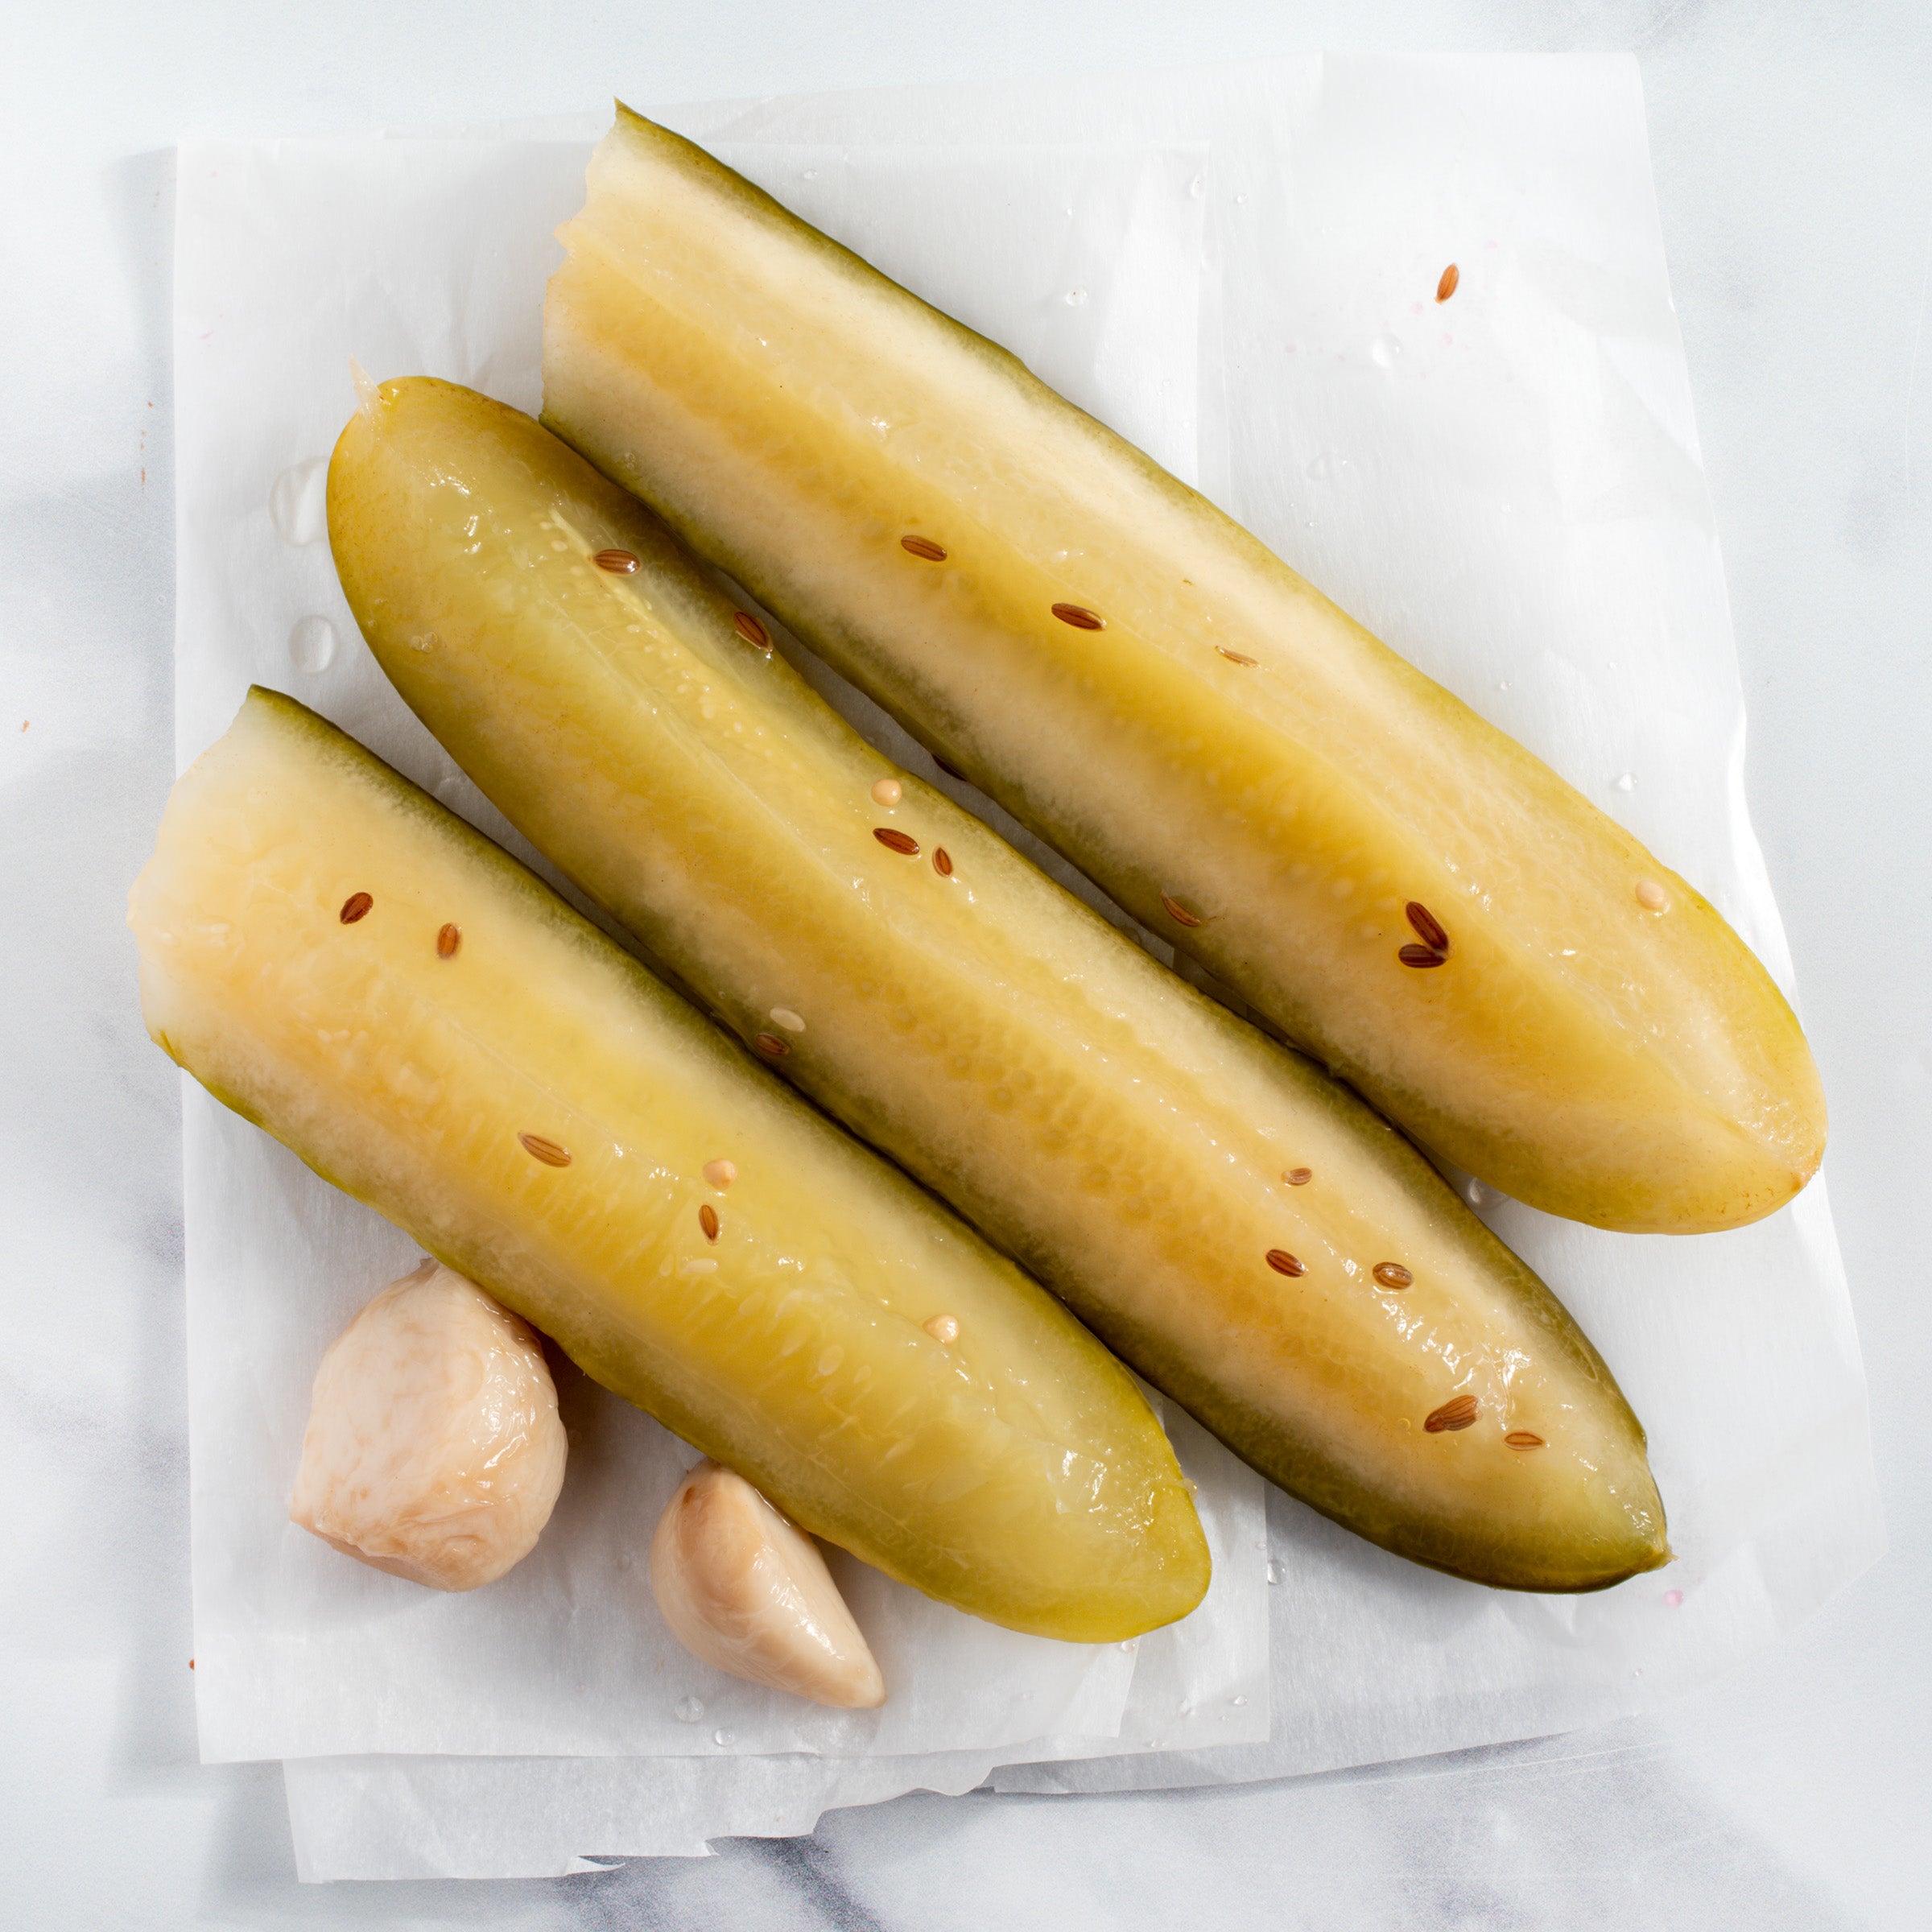 igourmet_11901_Giddy-Up Garlic Dills_Yee Haw Pickles_Pickles